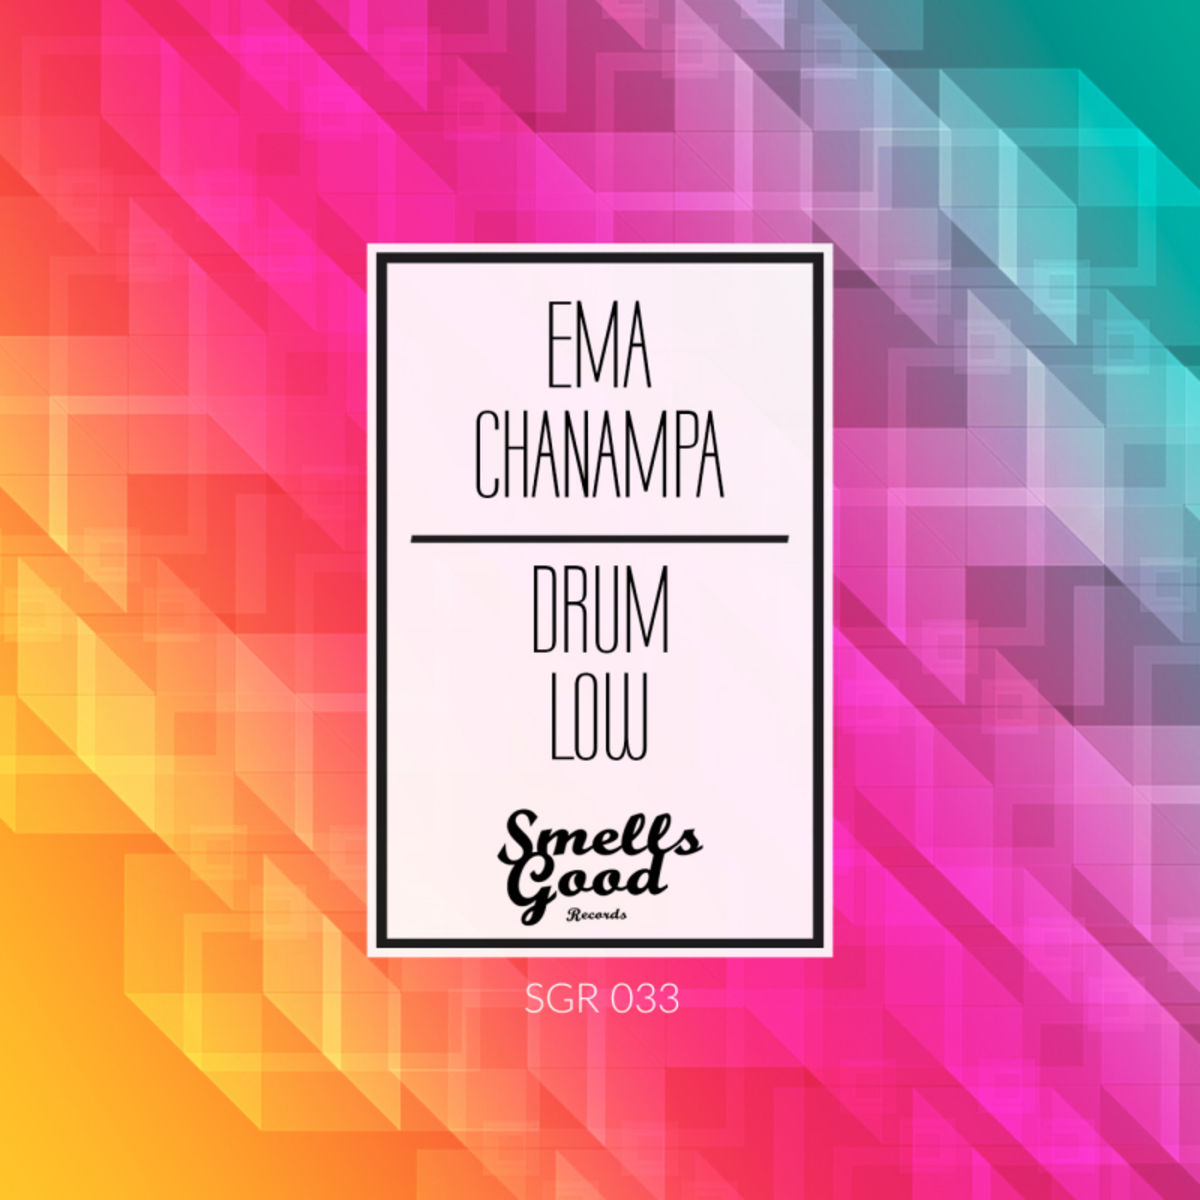 Emanuel Chanampa - Drum Low / Smells Good Records